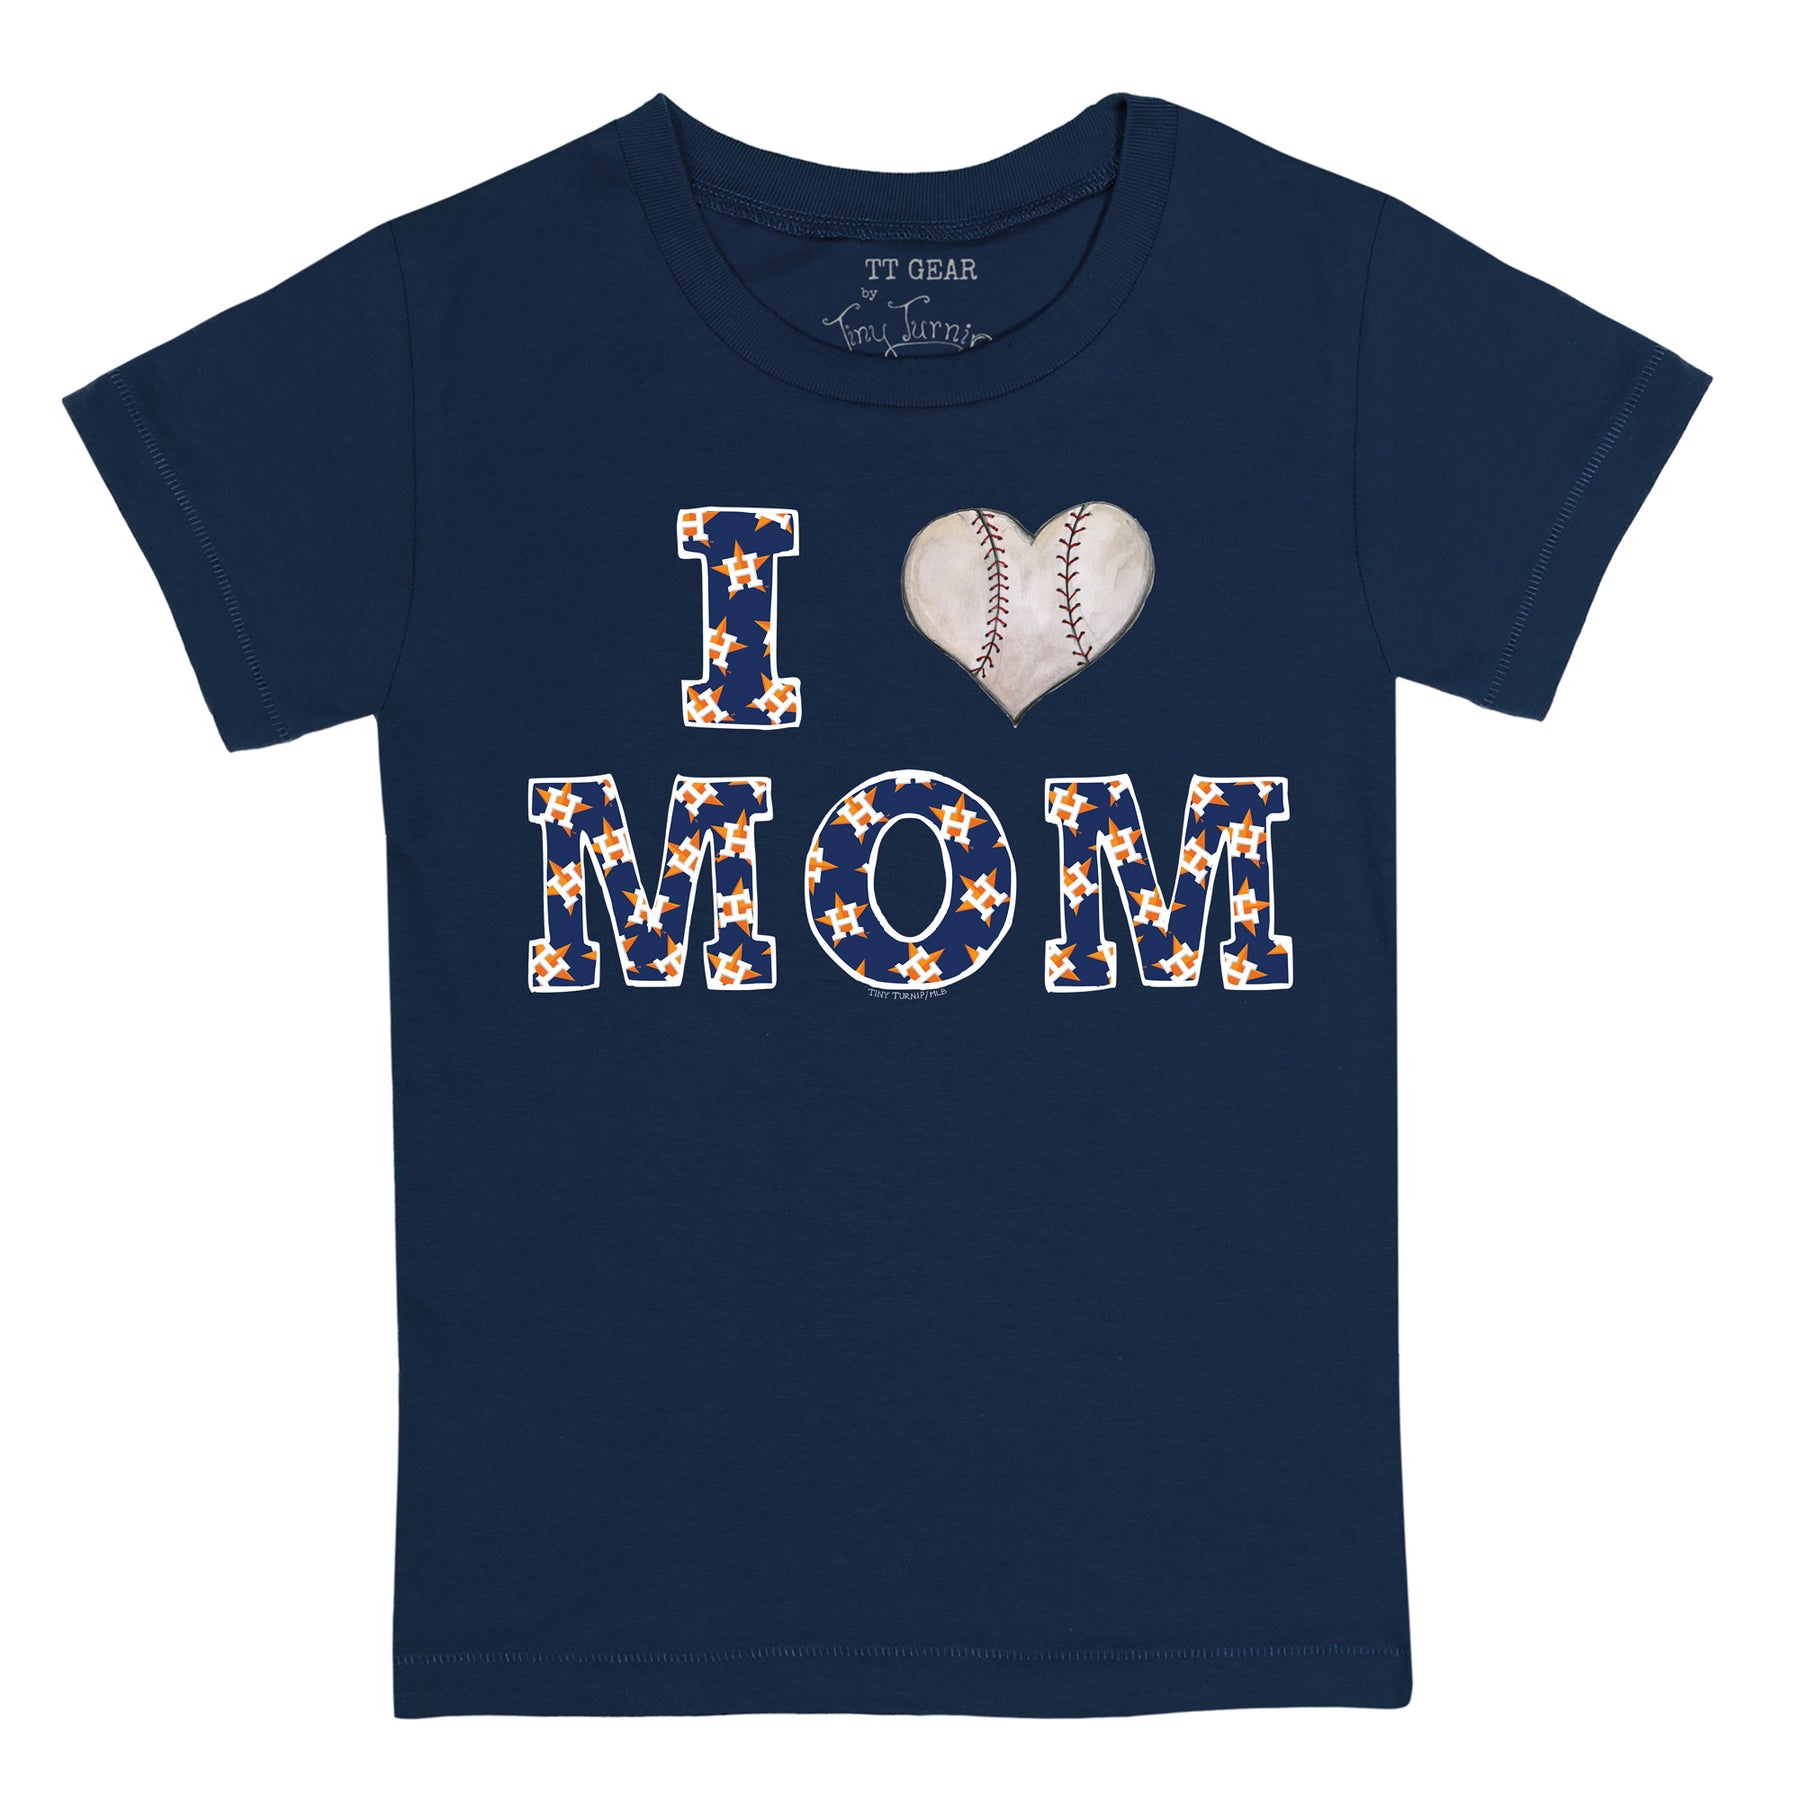 Houston Astros Tiny Turnip Women's Logo Mom 3/4-Sleeve Raglan T-Shirt -  White/Navy